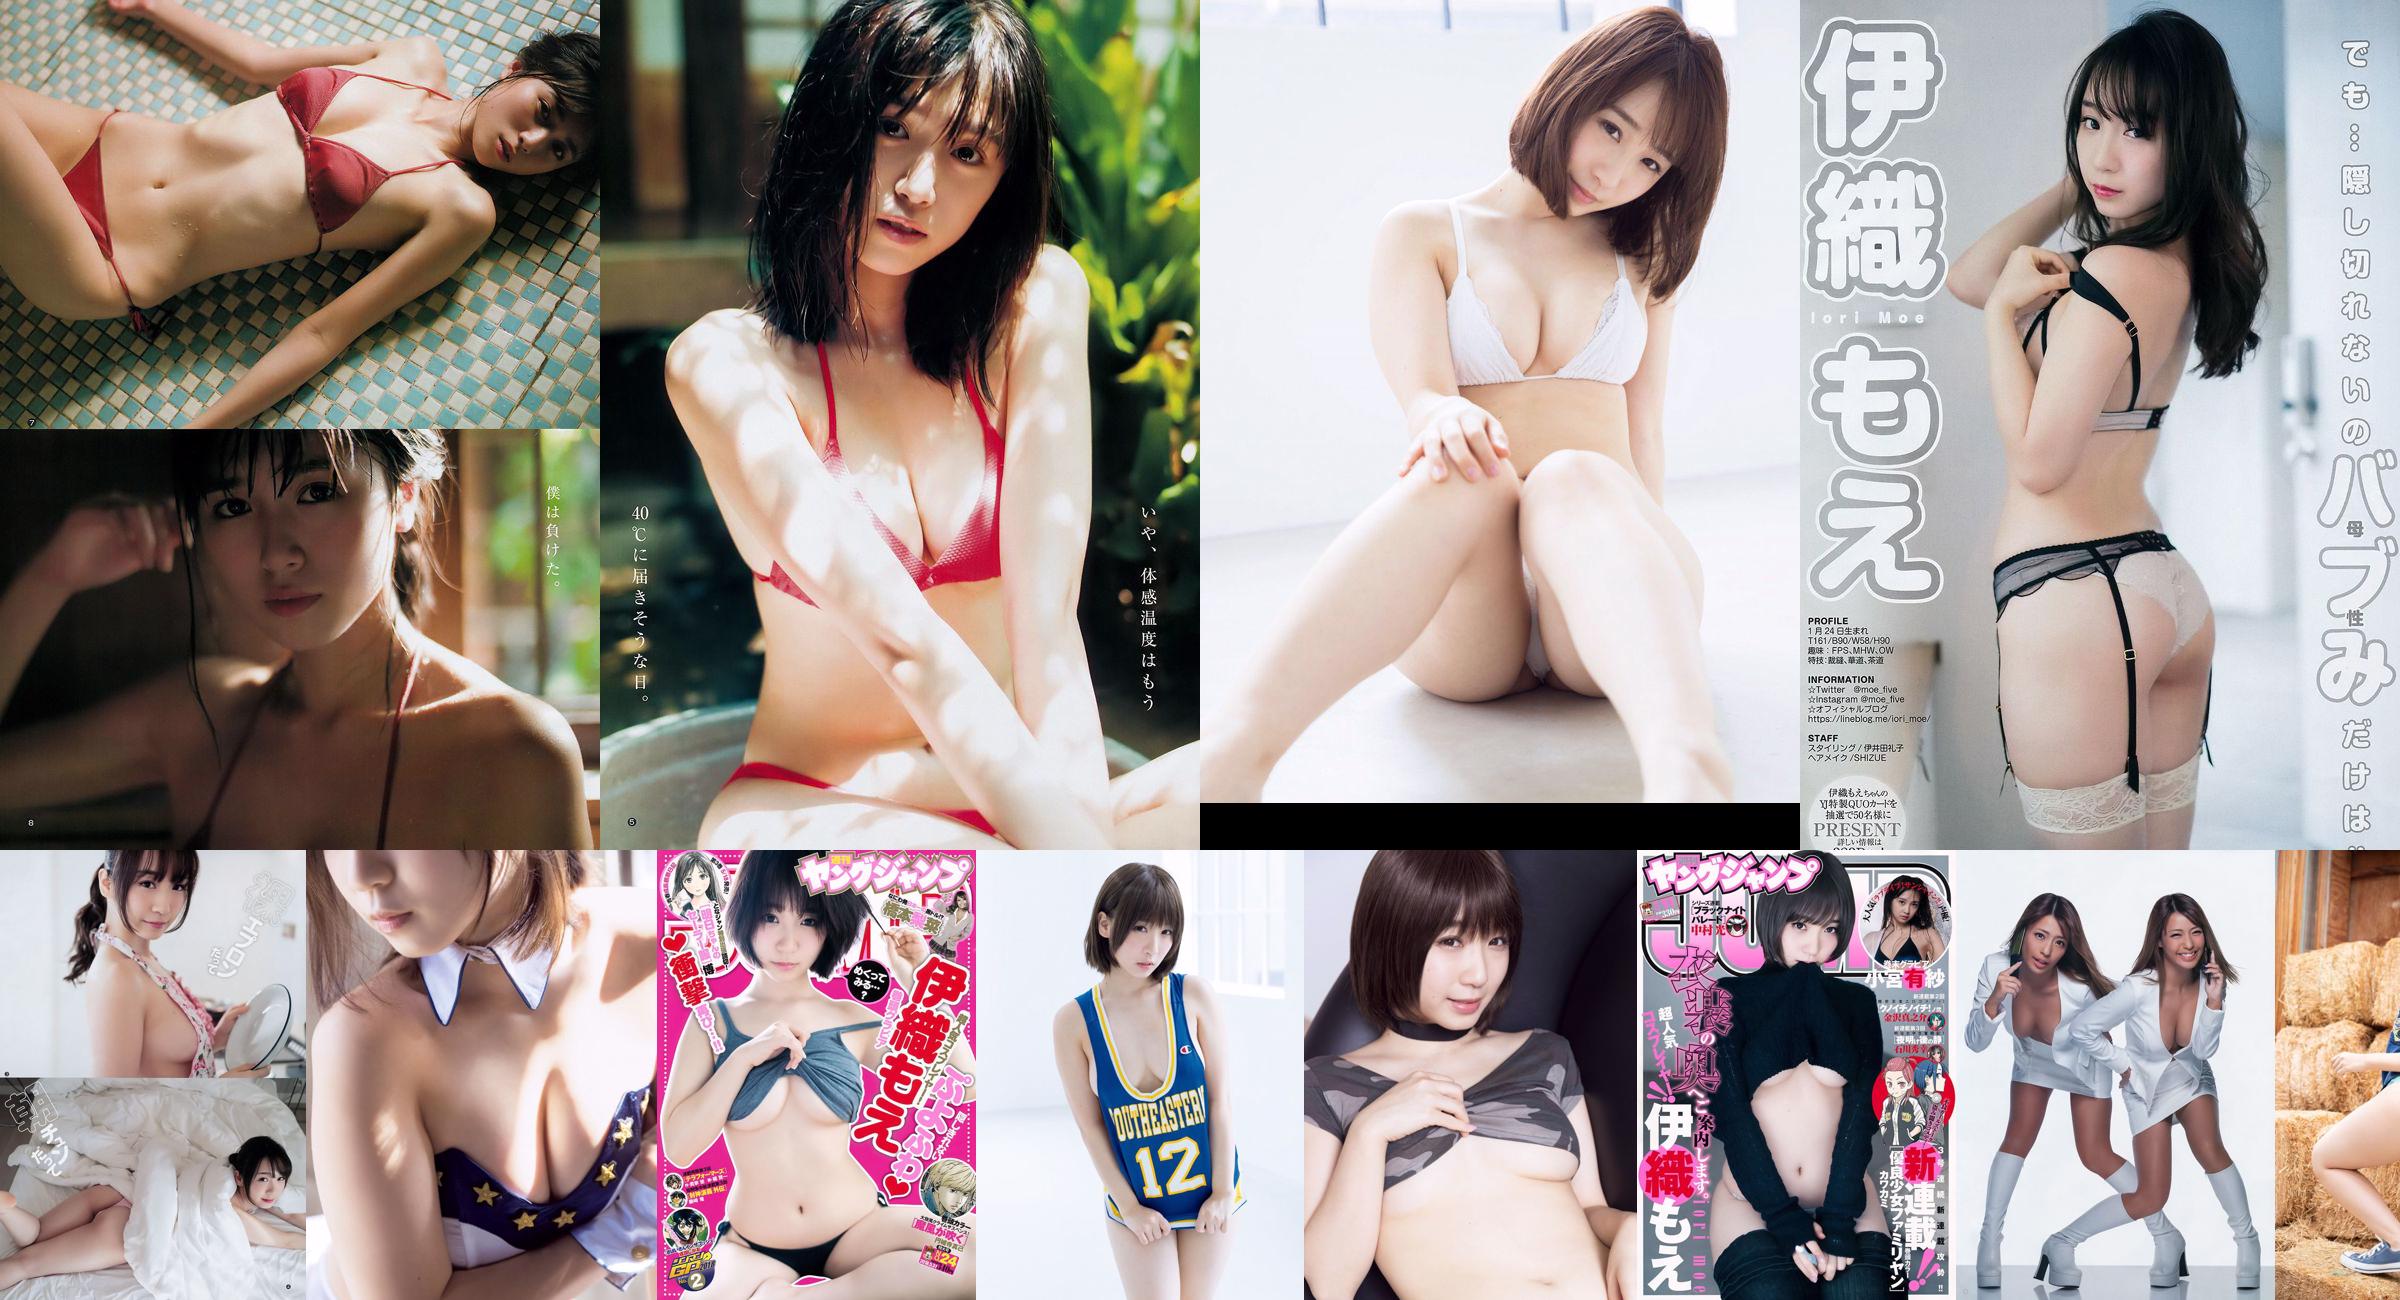 [FRIDAY] Moe Iori << "If she changes into a uniform" >> Photo No.0ef90e Page 1